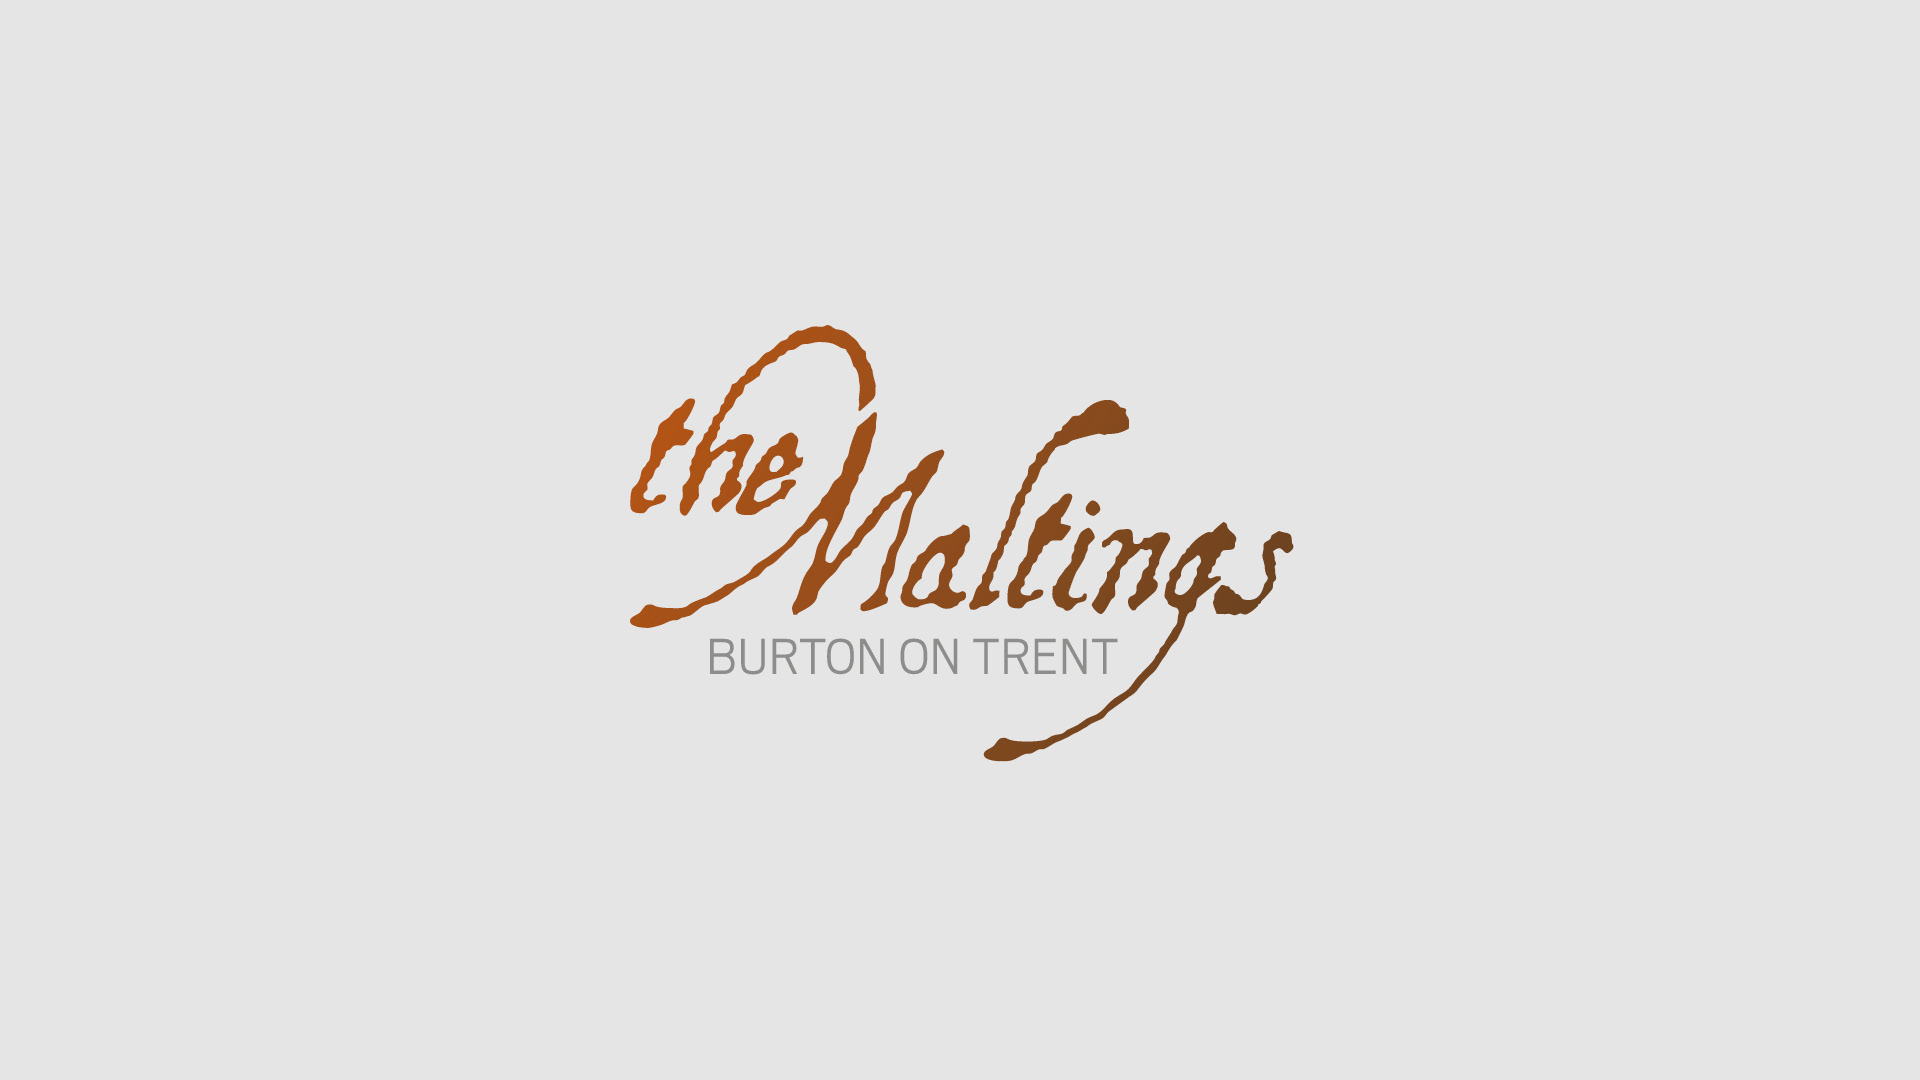 Maltings logo